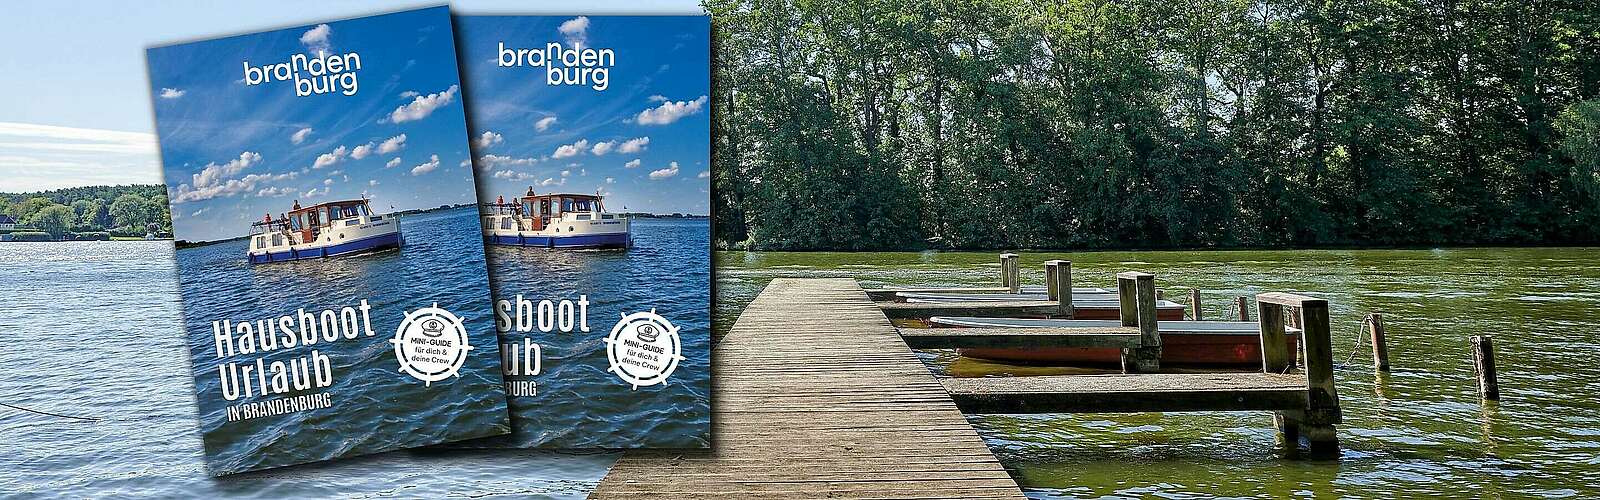 Hausboot Mini-Guide Header Holzsteg,
        
    

        Foto: Fotograf / Lizenz - Media Import/Florian Trykowski